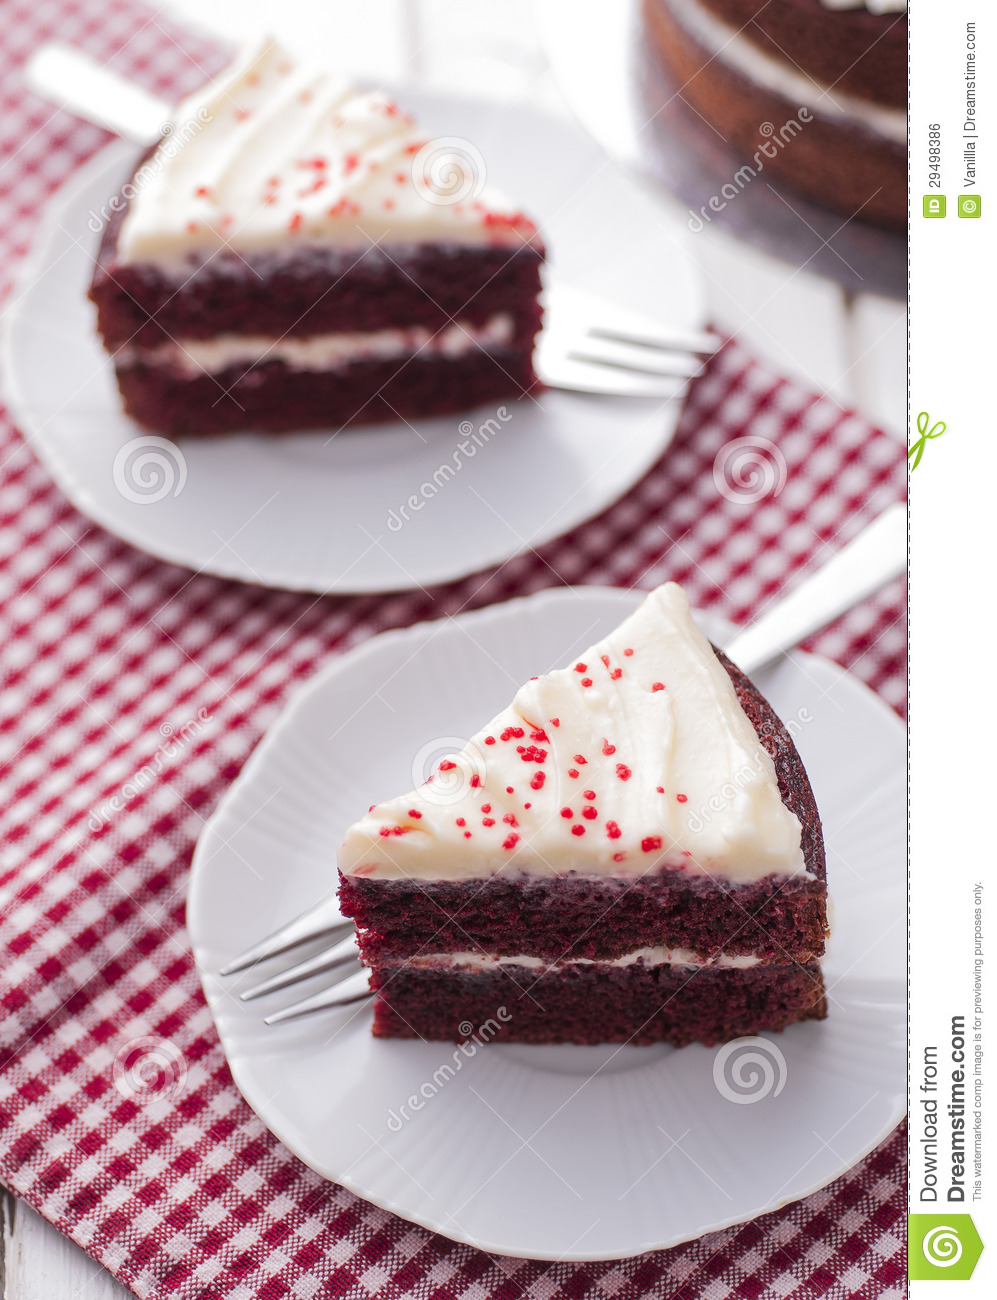 Red Velvet Cake Royalty Free Stock Image   Image  29498386